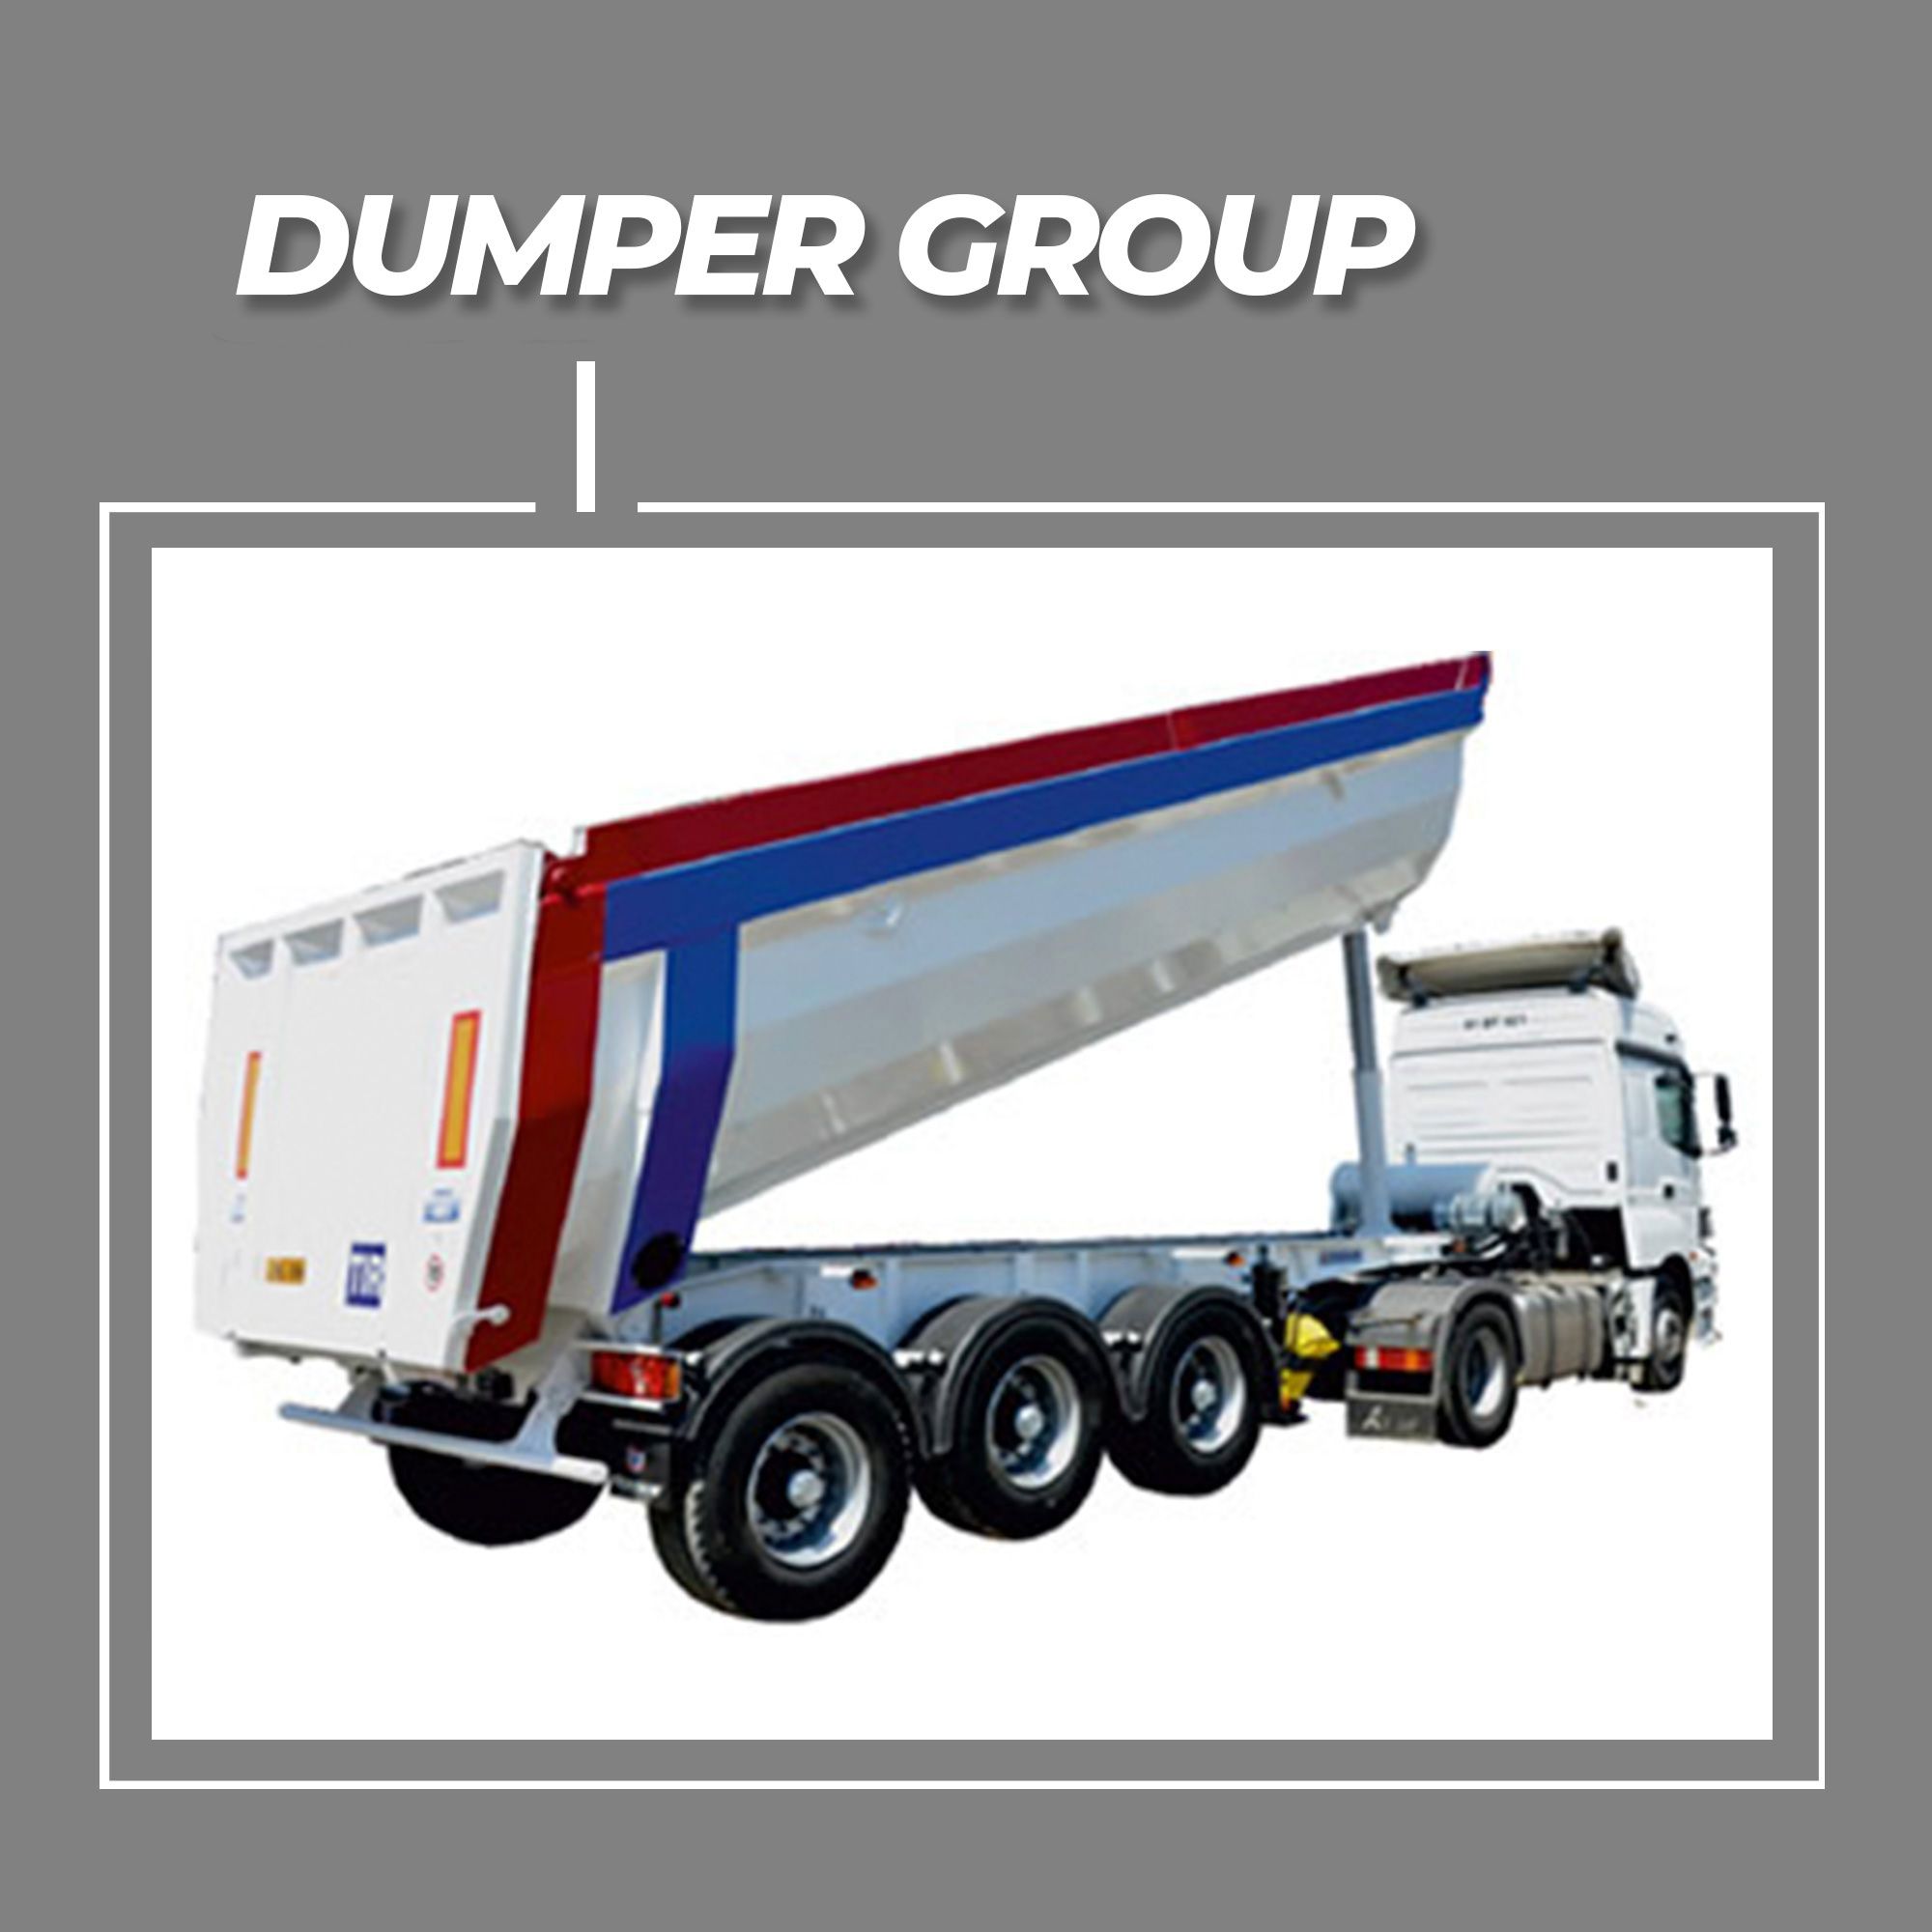 Dumper Group